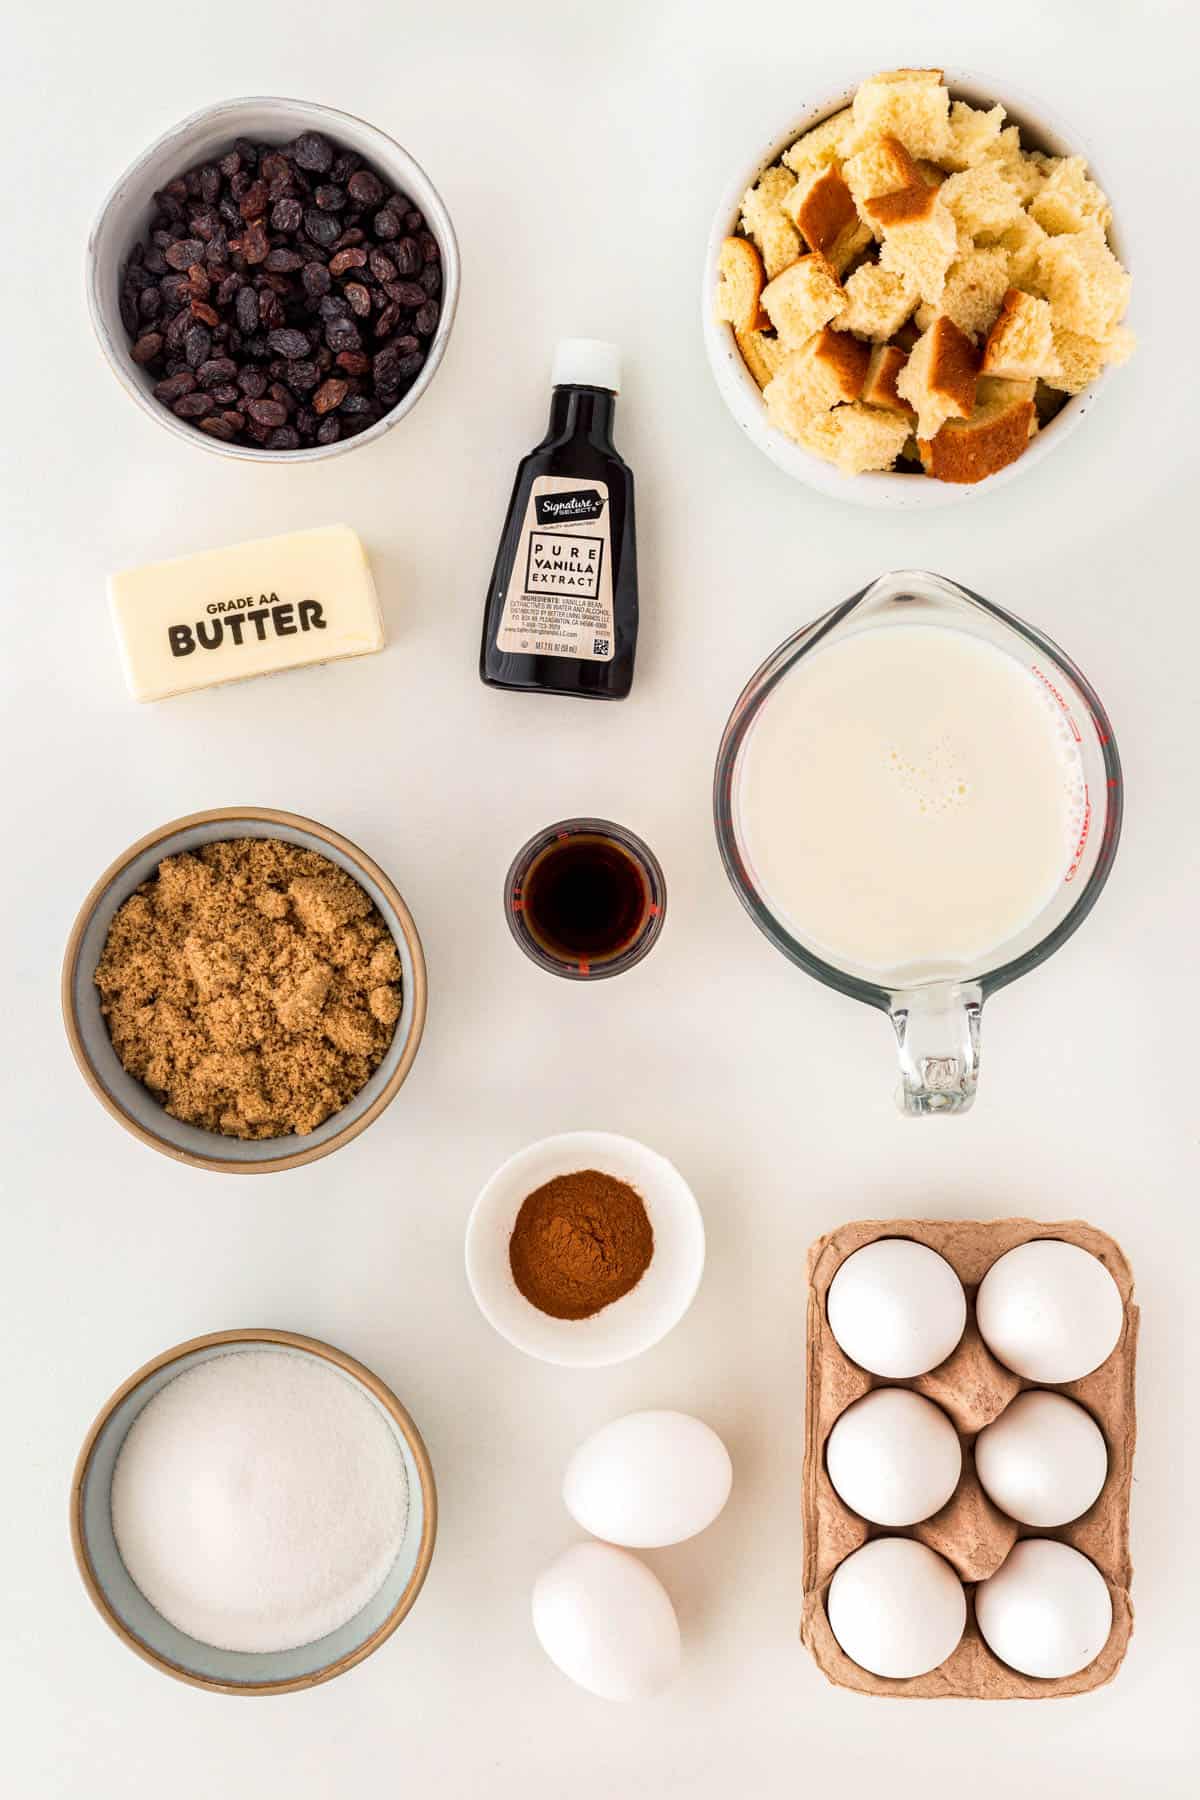 Ingredients for bread pudding recipe: rum and raisin. 